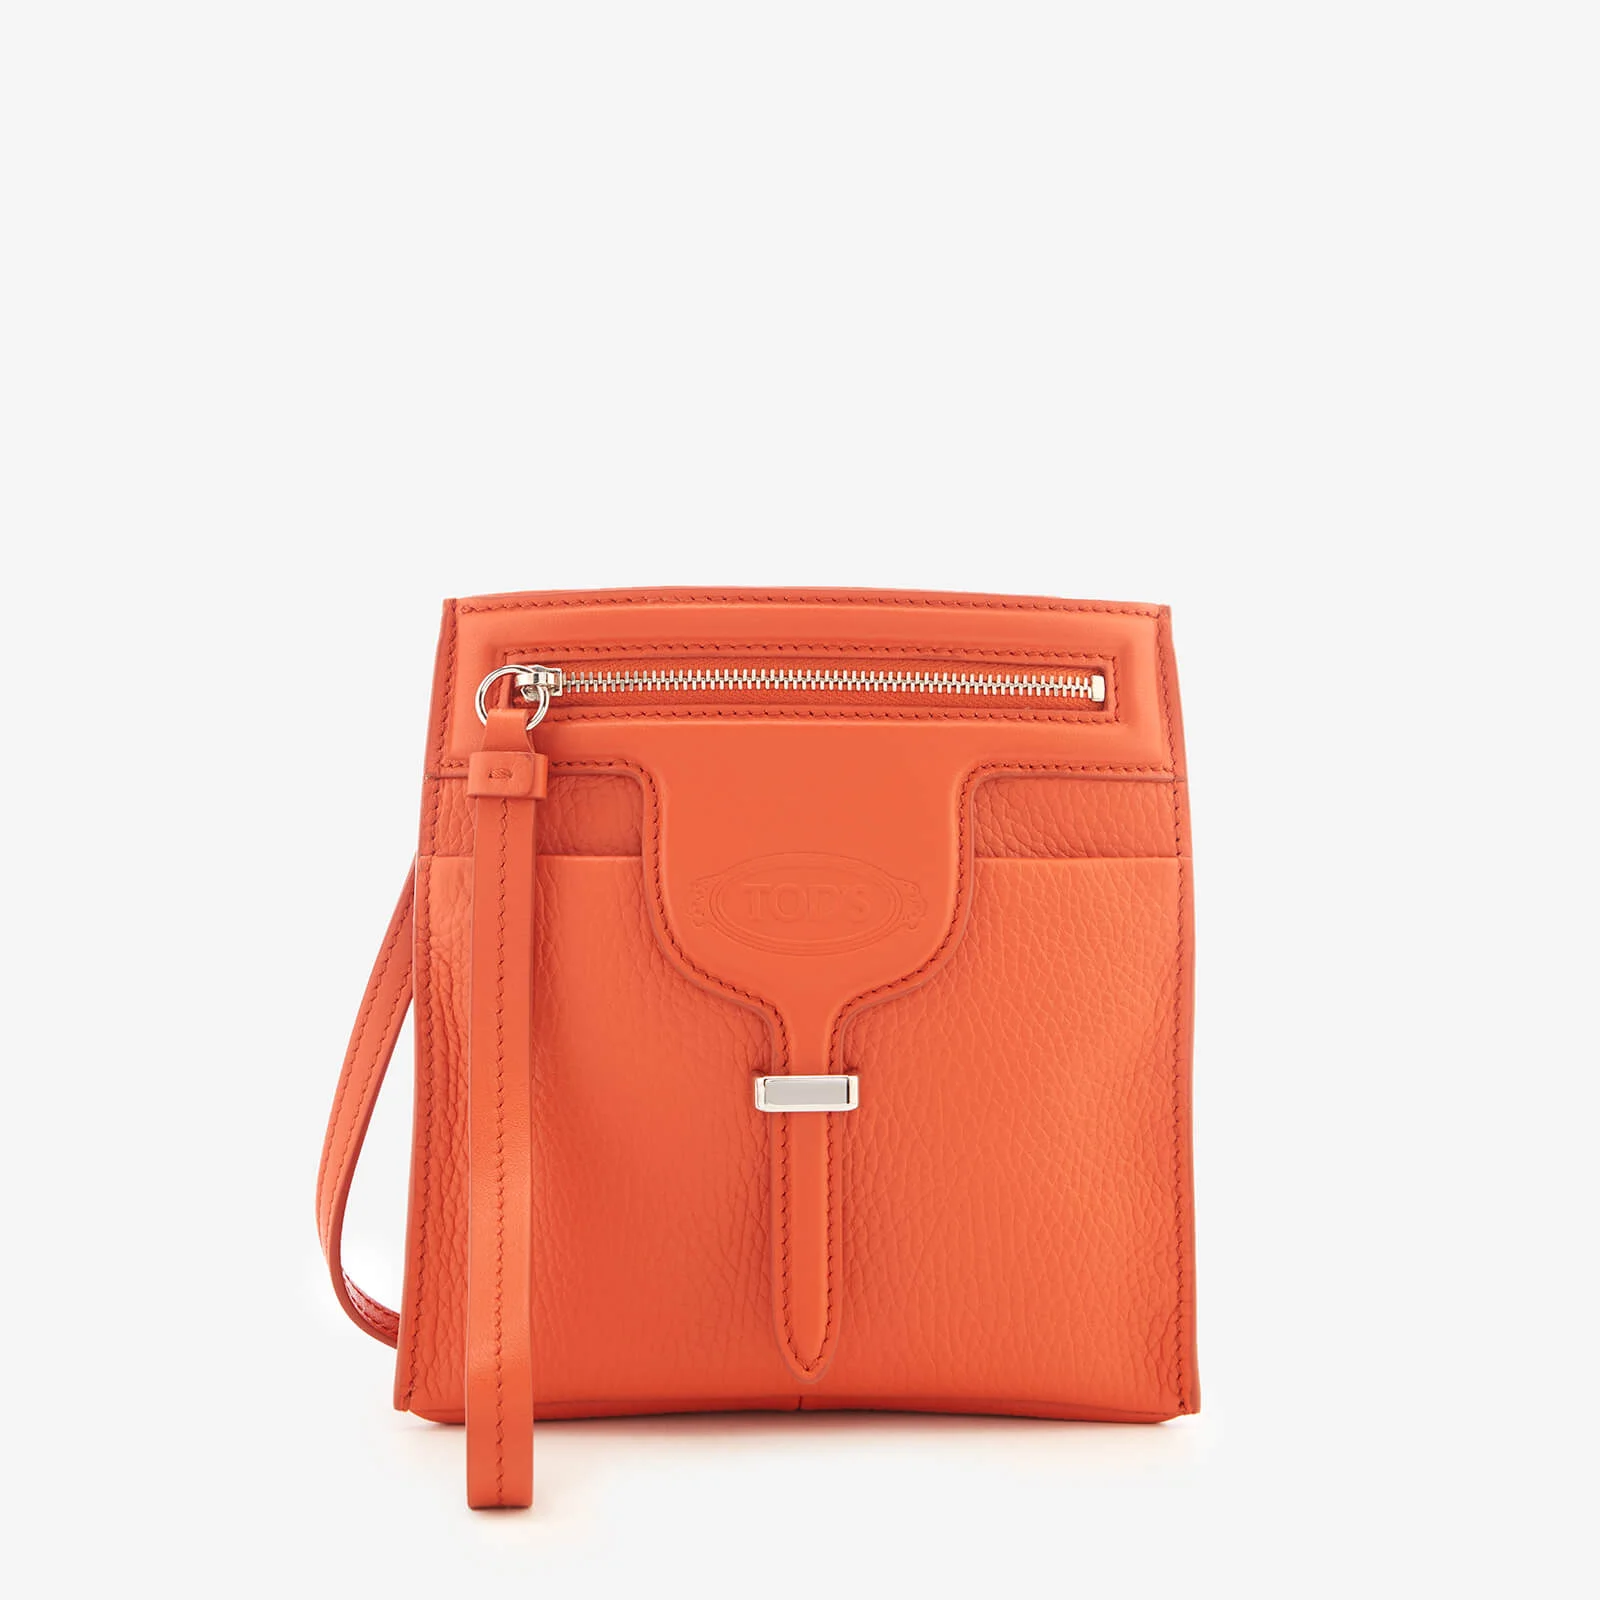 Tod's Women's Micro Bag - Orange Image 1